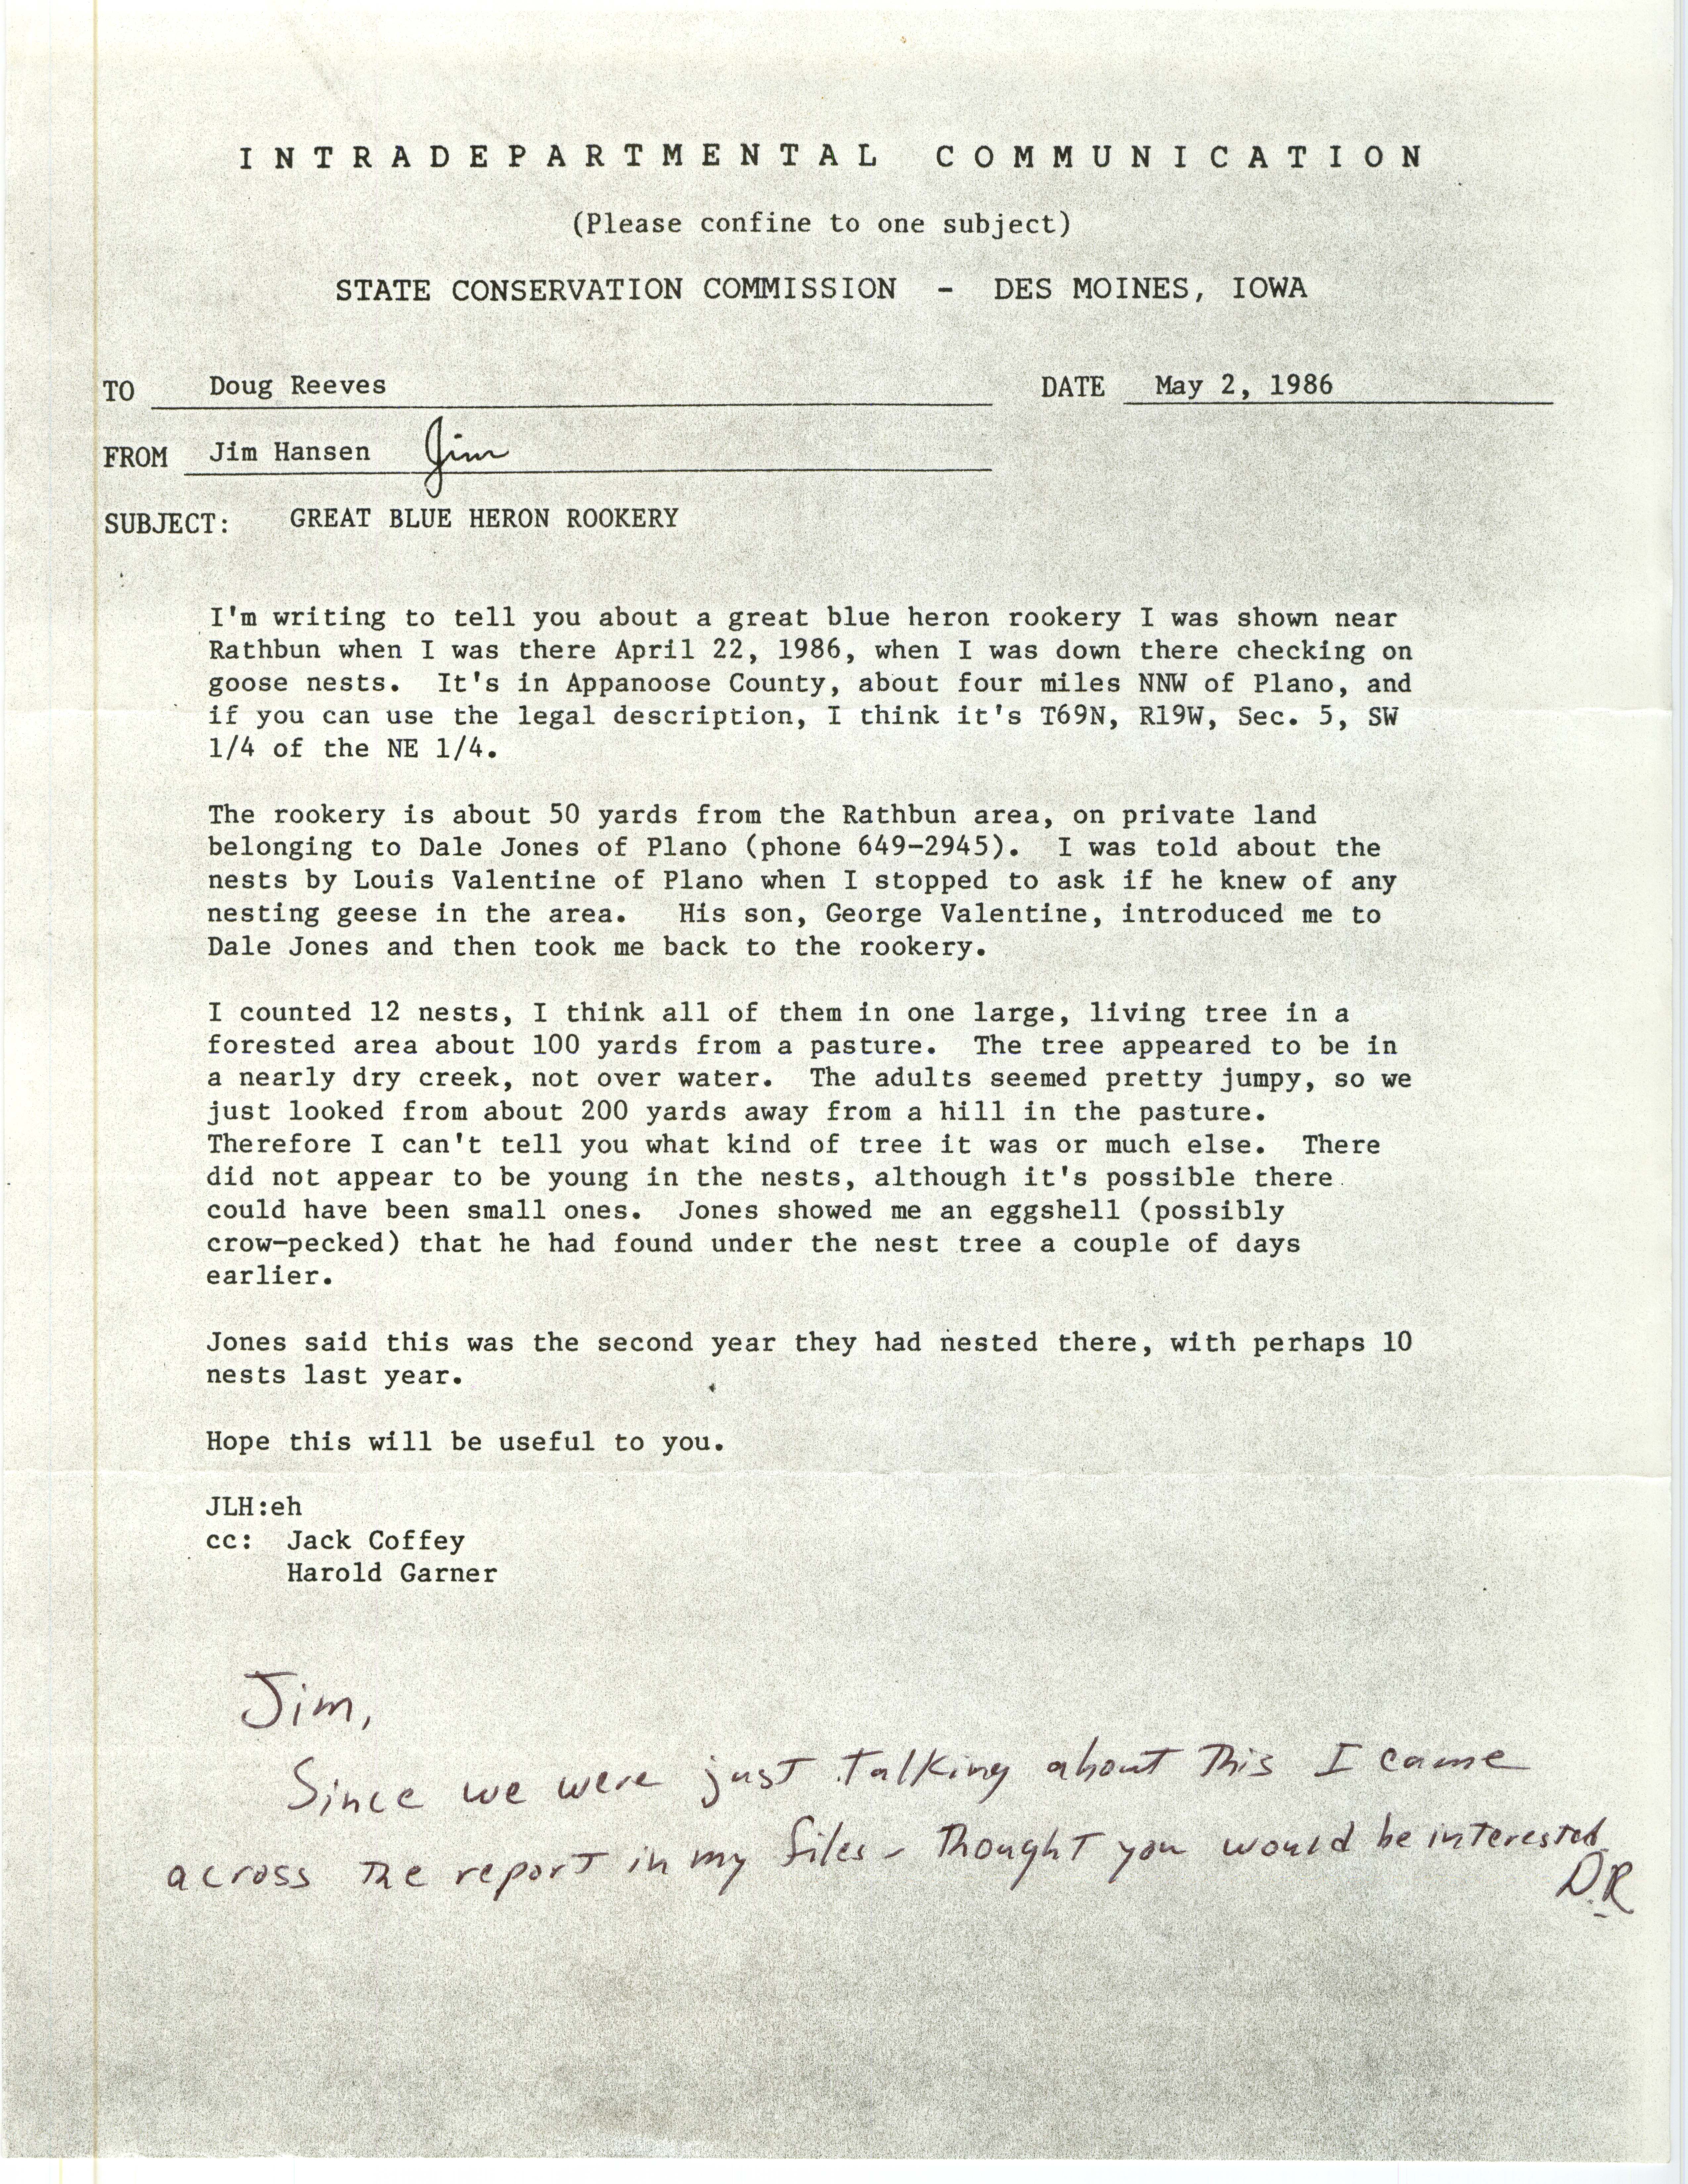 James L. Hansen letter to Doug Reeves regarding Great Blue Heron Rookery, May 2 1986  